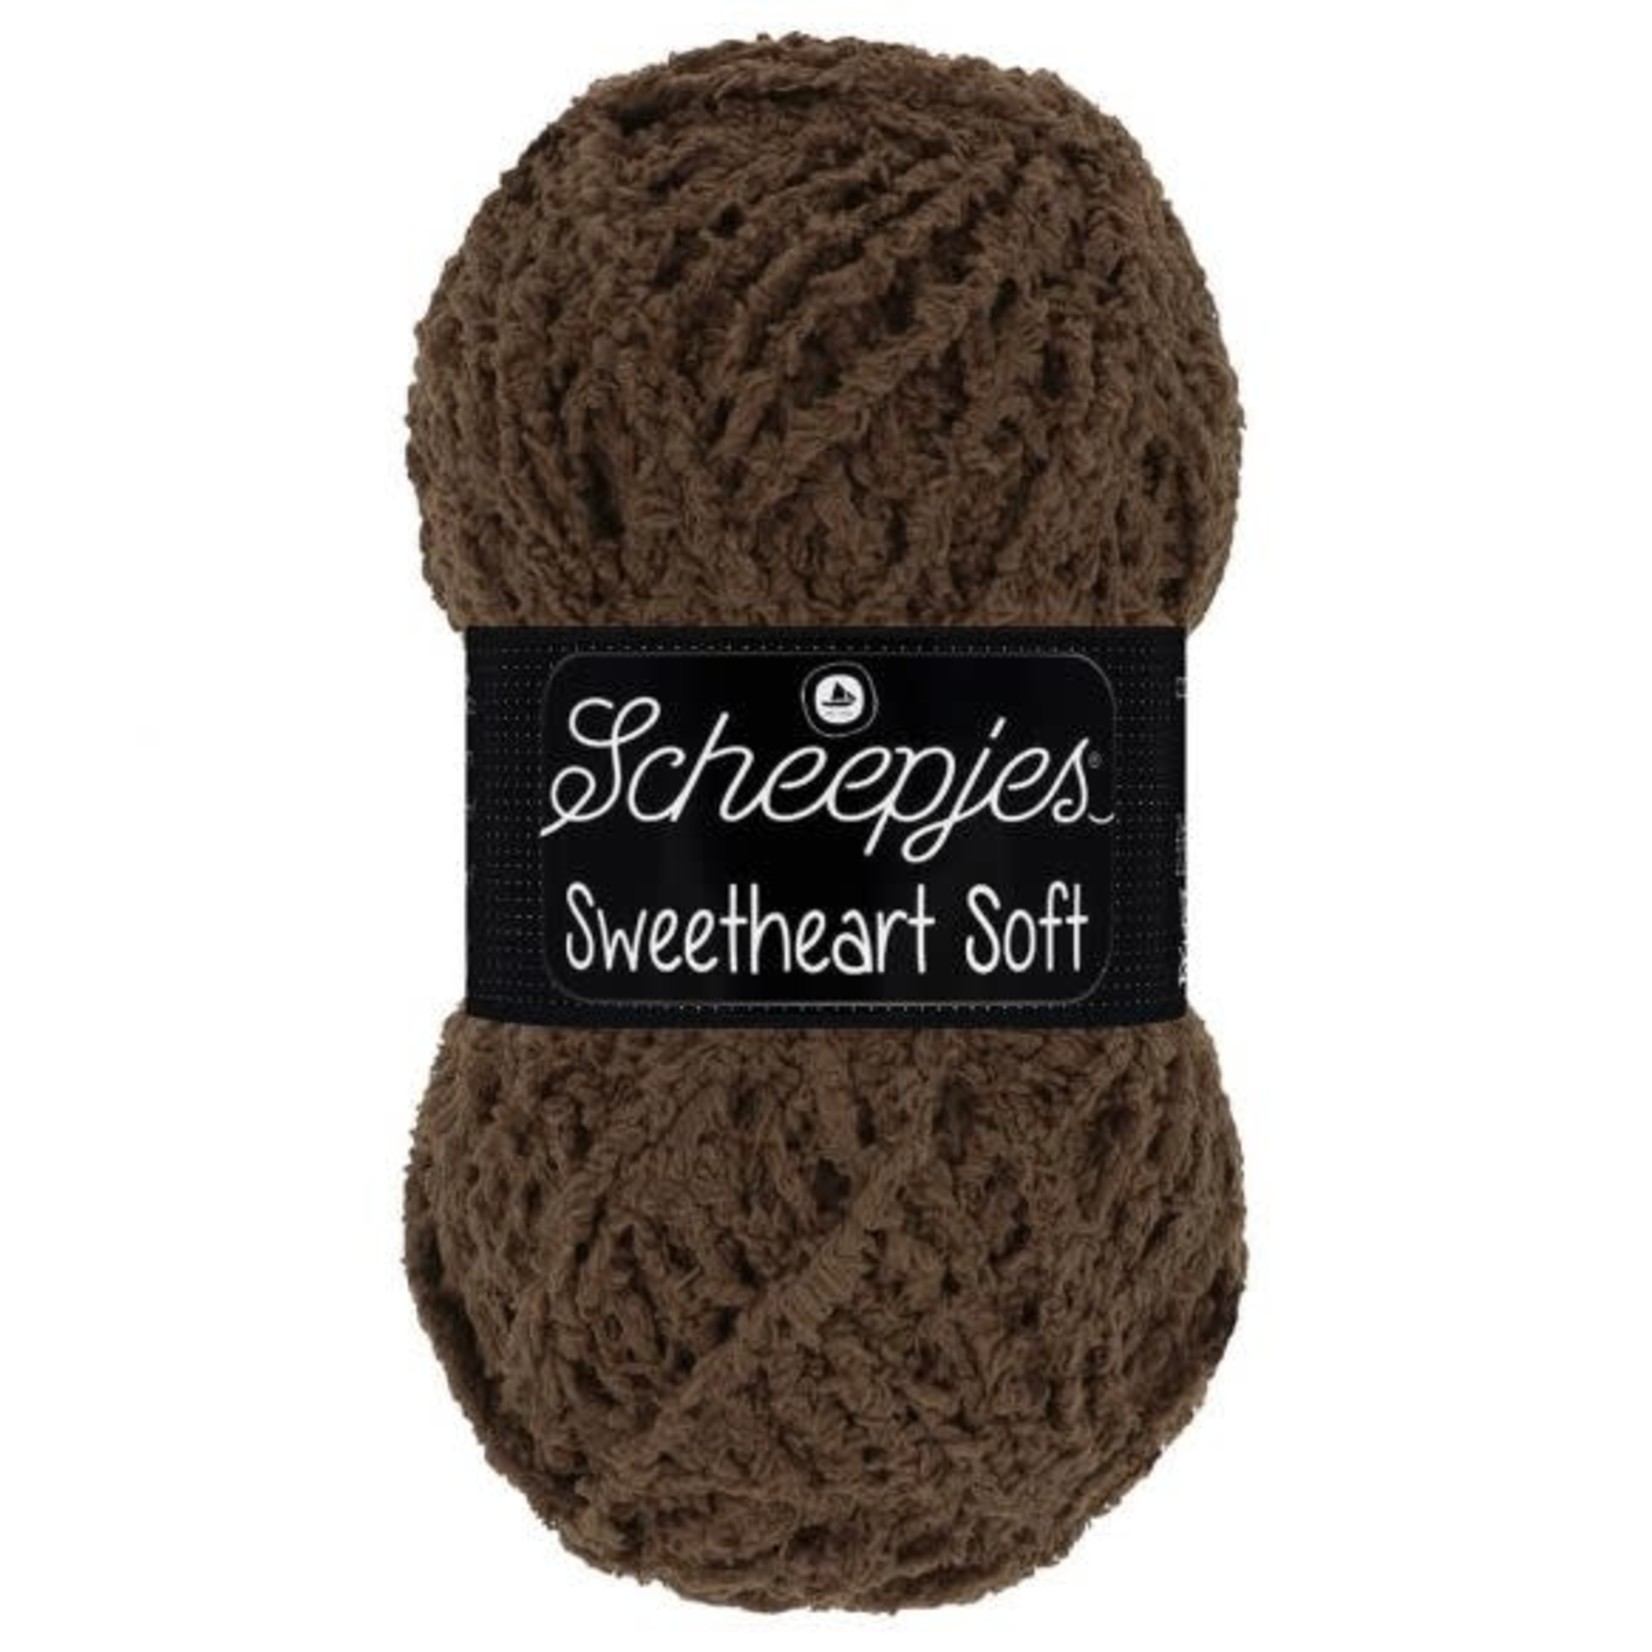 Scheepjes Sweetheart Soft - 100g - 026